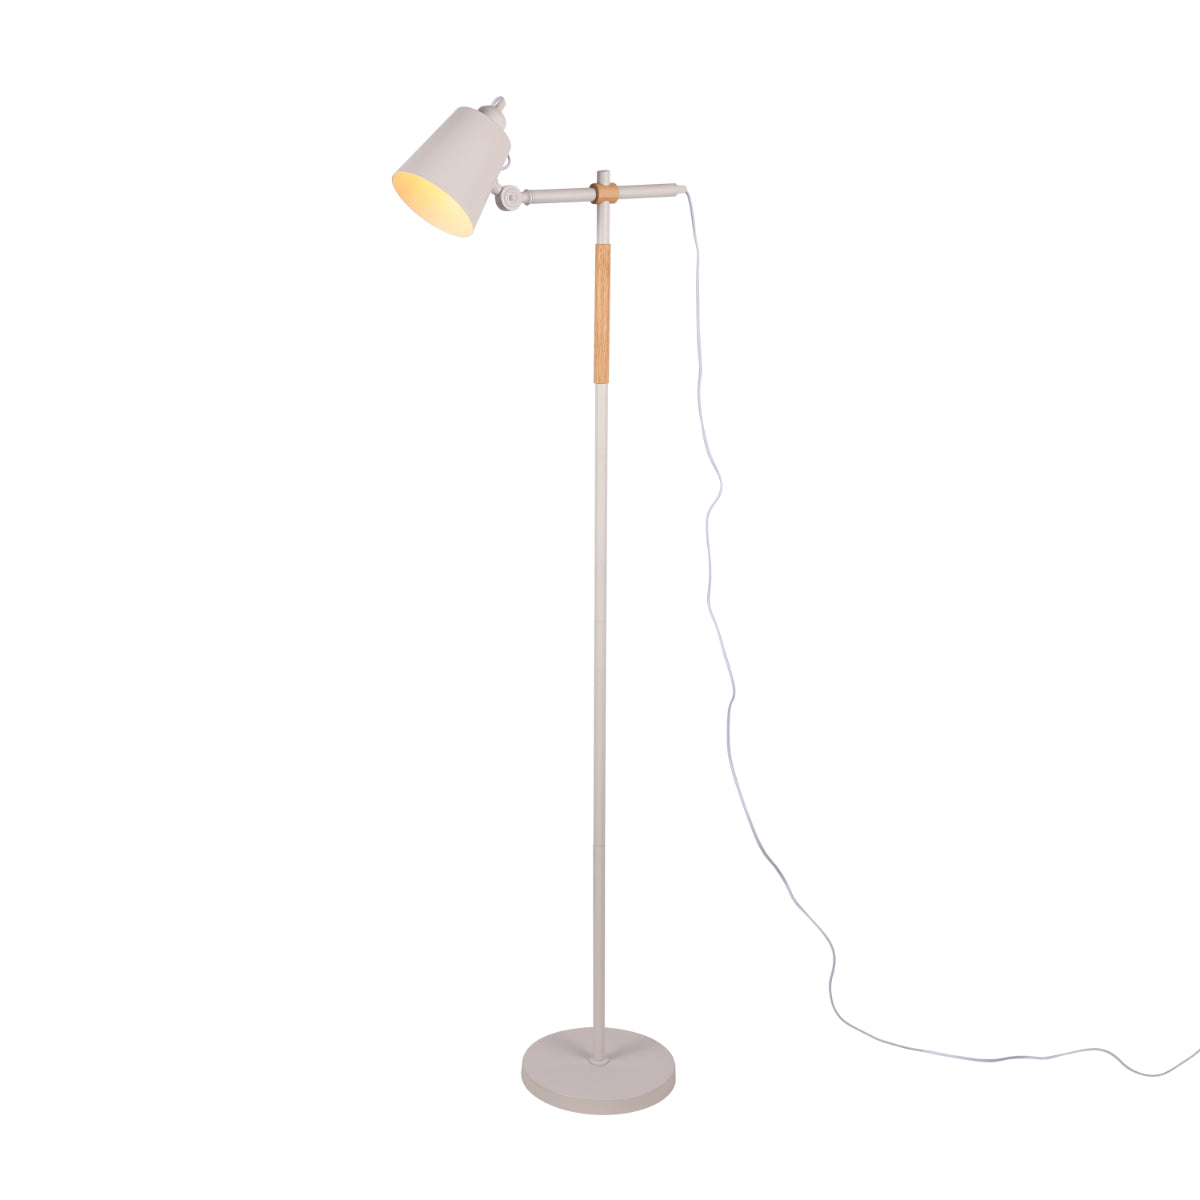 Main image of Sleek Nordic Floor Lamp with Oak Wood Detail - E27